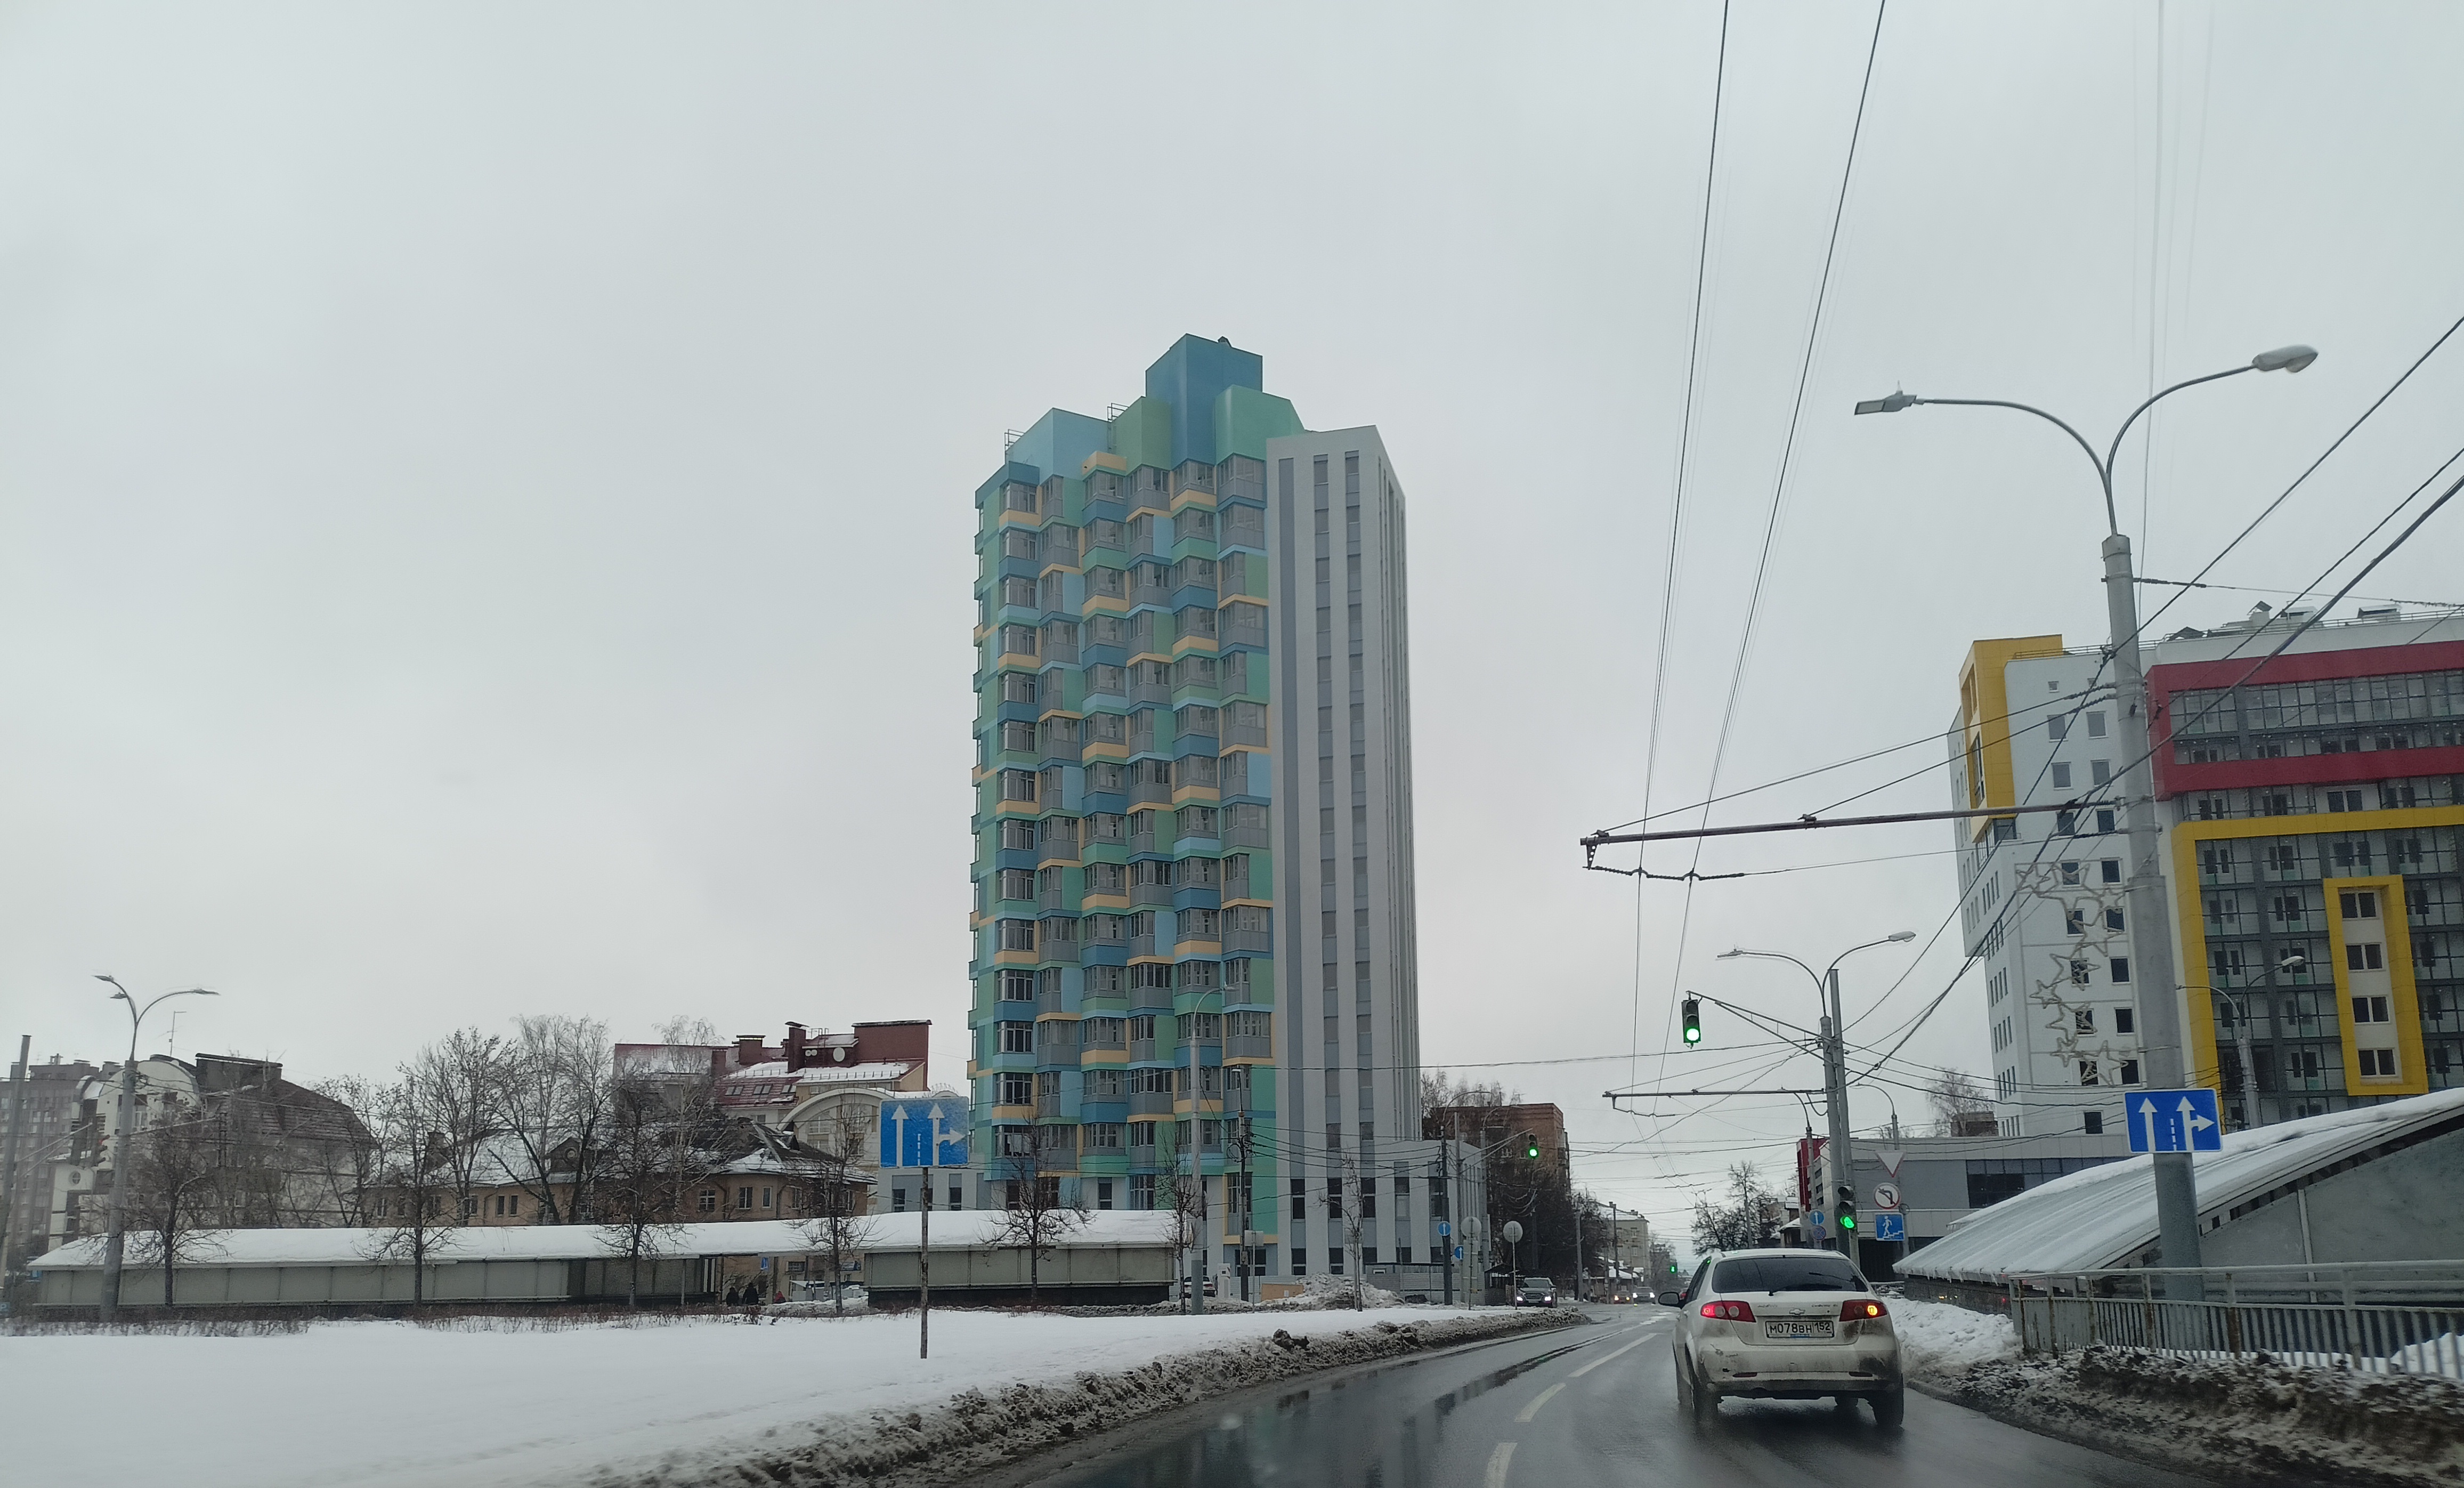 ЖК «Дом с видом на небо» в центре в Нижнего Новгорода достроят в начале 2023 года - фото 1